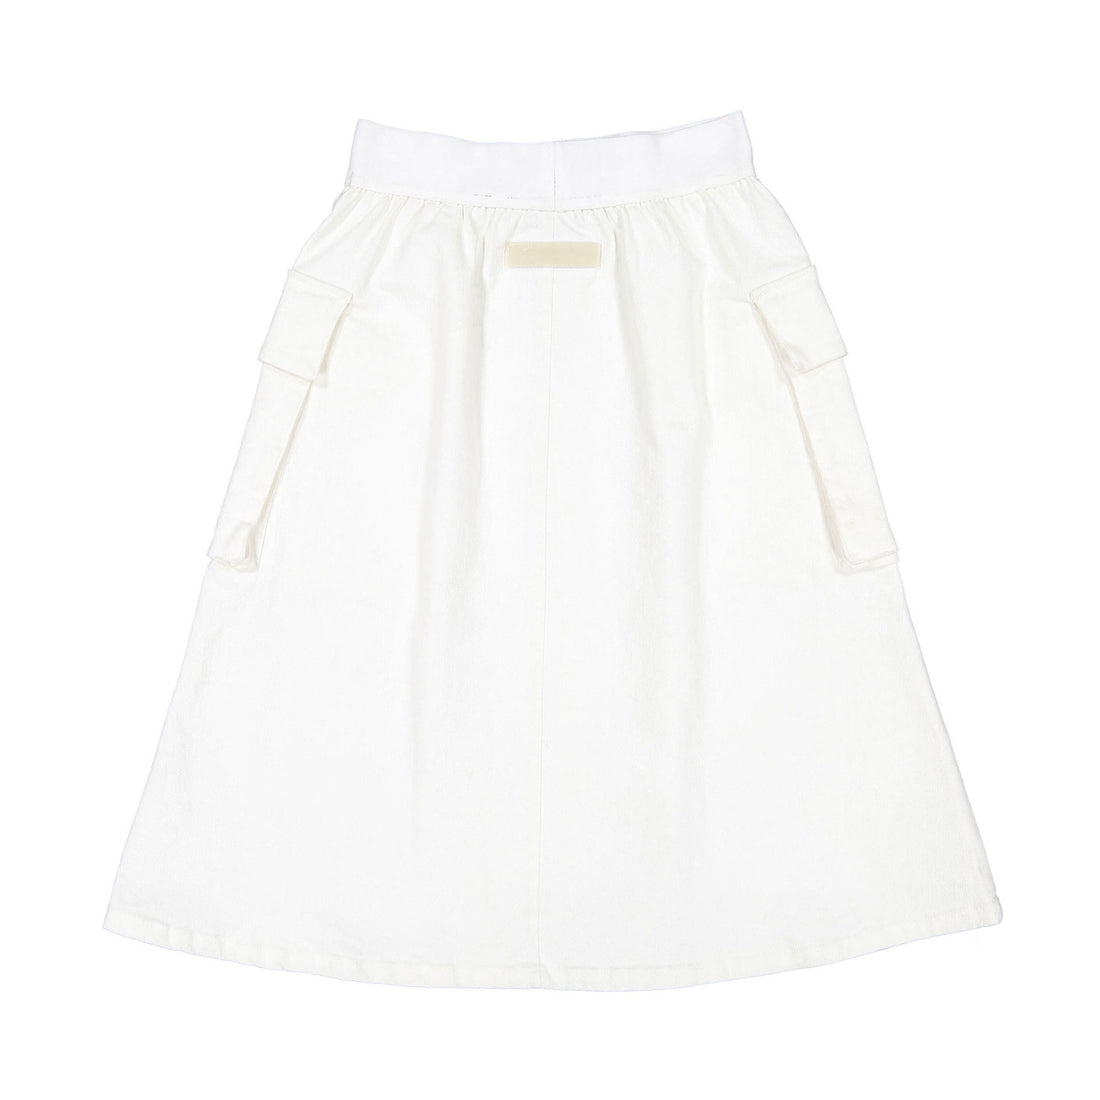 Elements White Sports Club Skirt